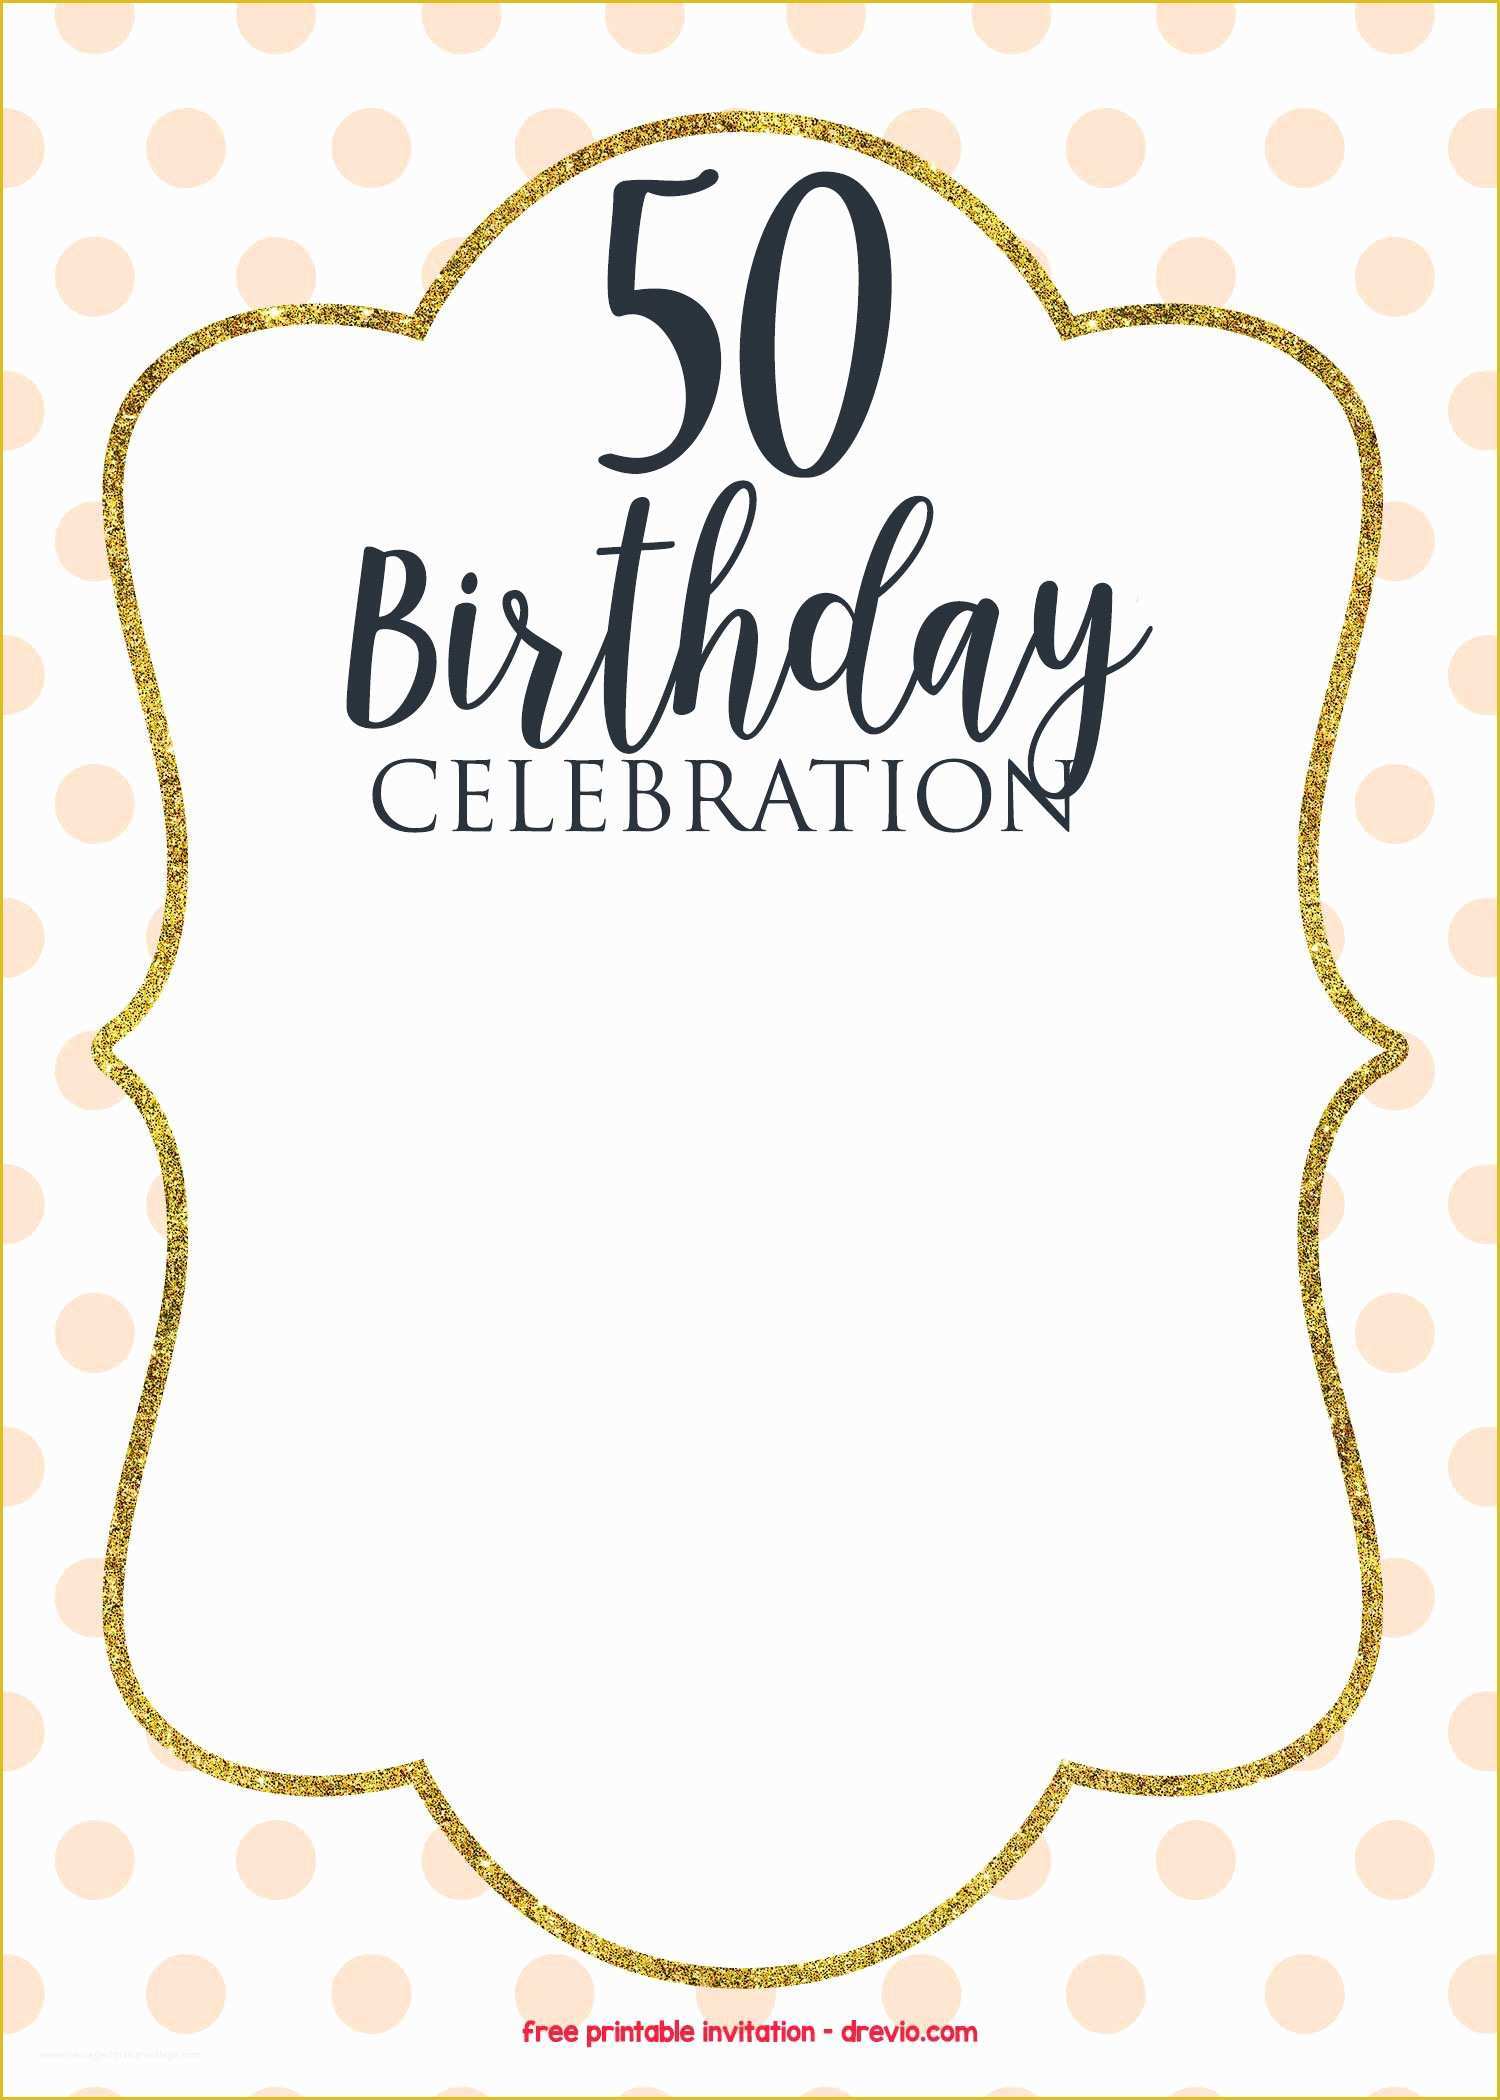 Free Online 50th Birthday Invitation Templates Of 50th Birthday Invitations Line